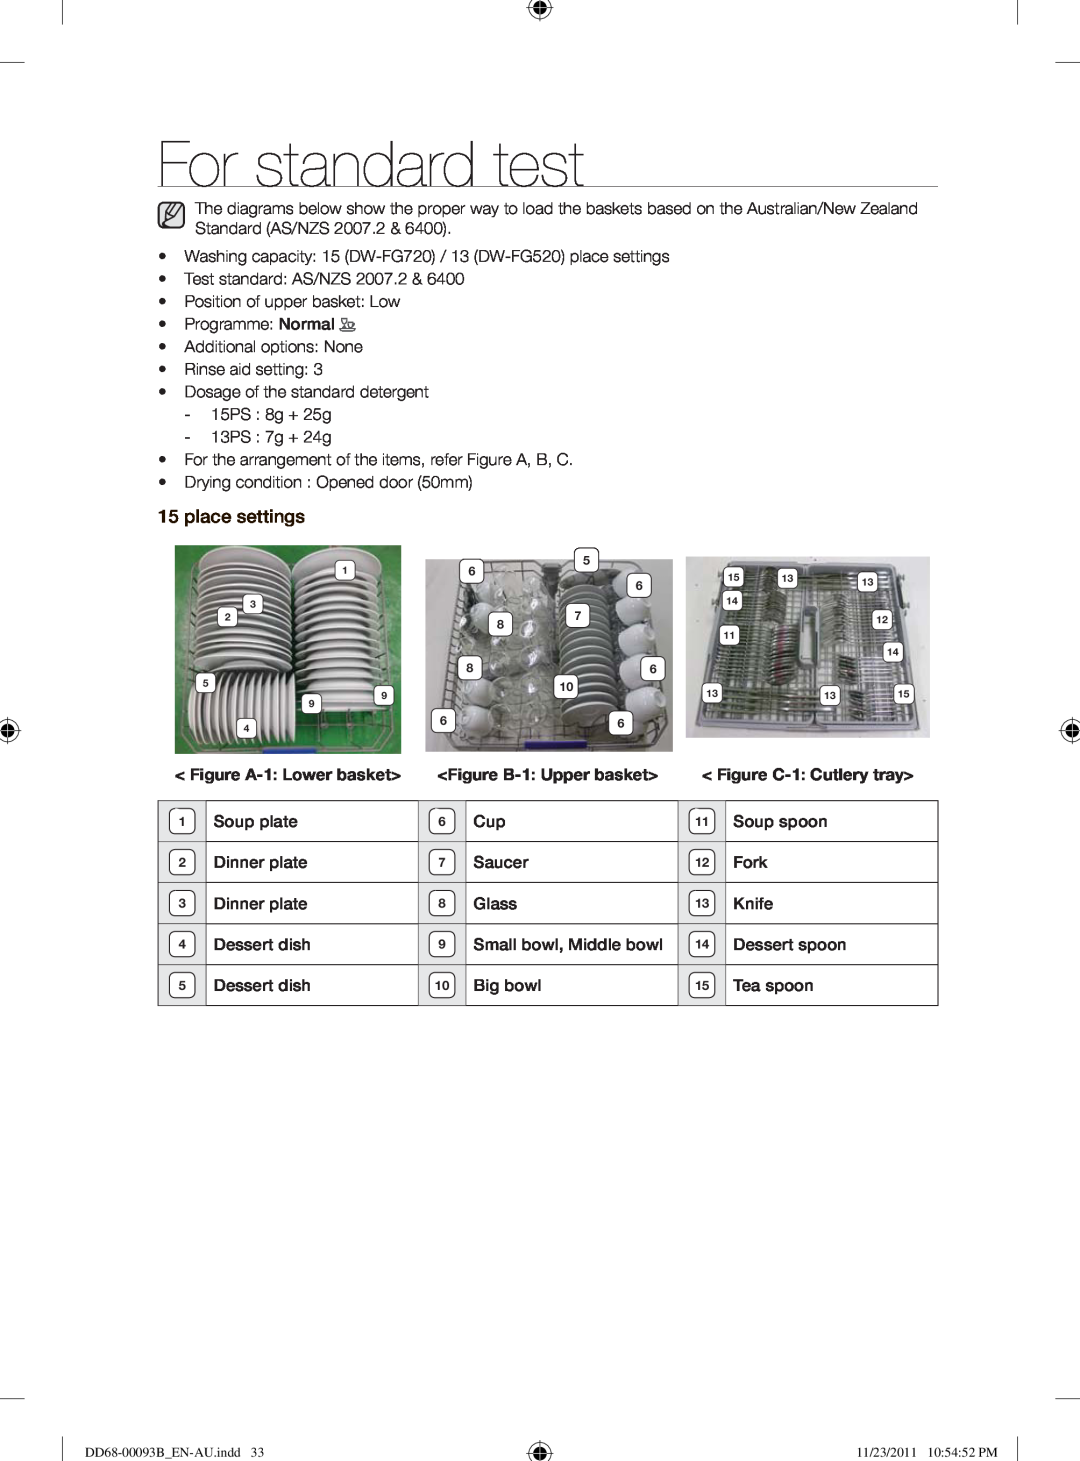 Samsung DW-FG520, DW-FG720 user manual For standard test, place settings, Figure B-1 Upper basket, Figure C-1 Cutlery tray 